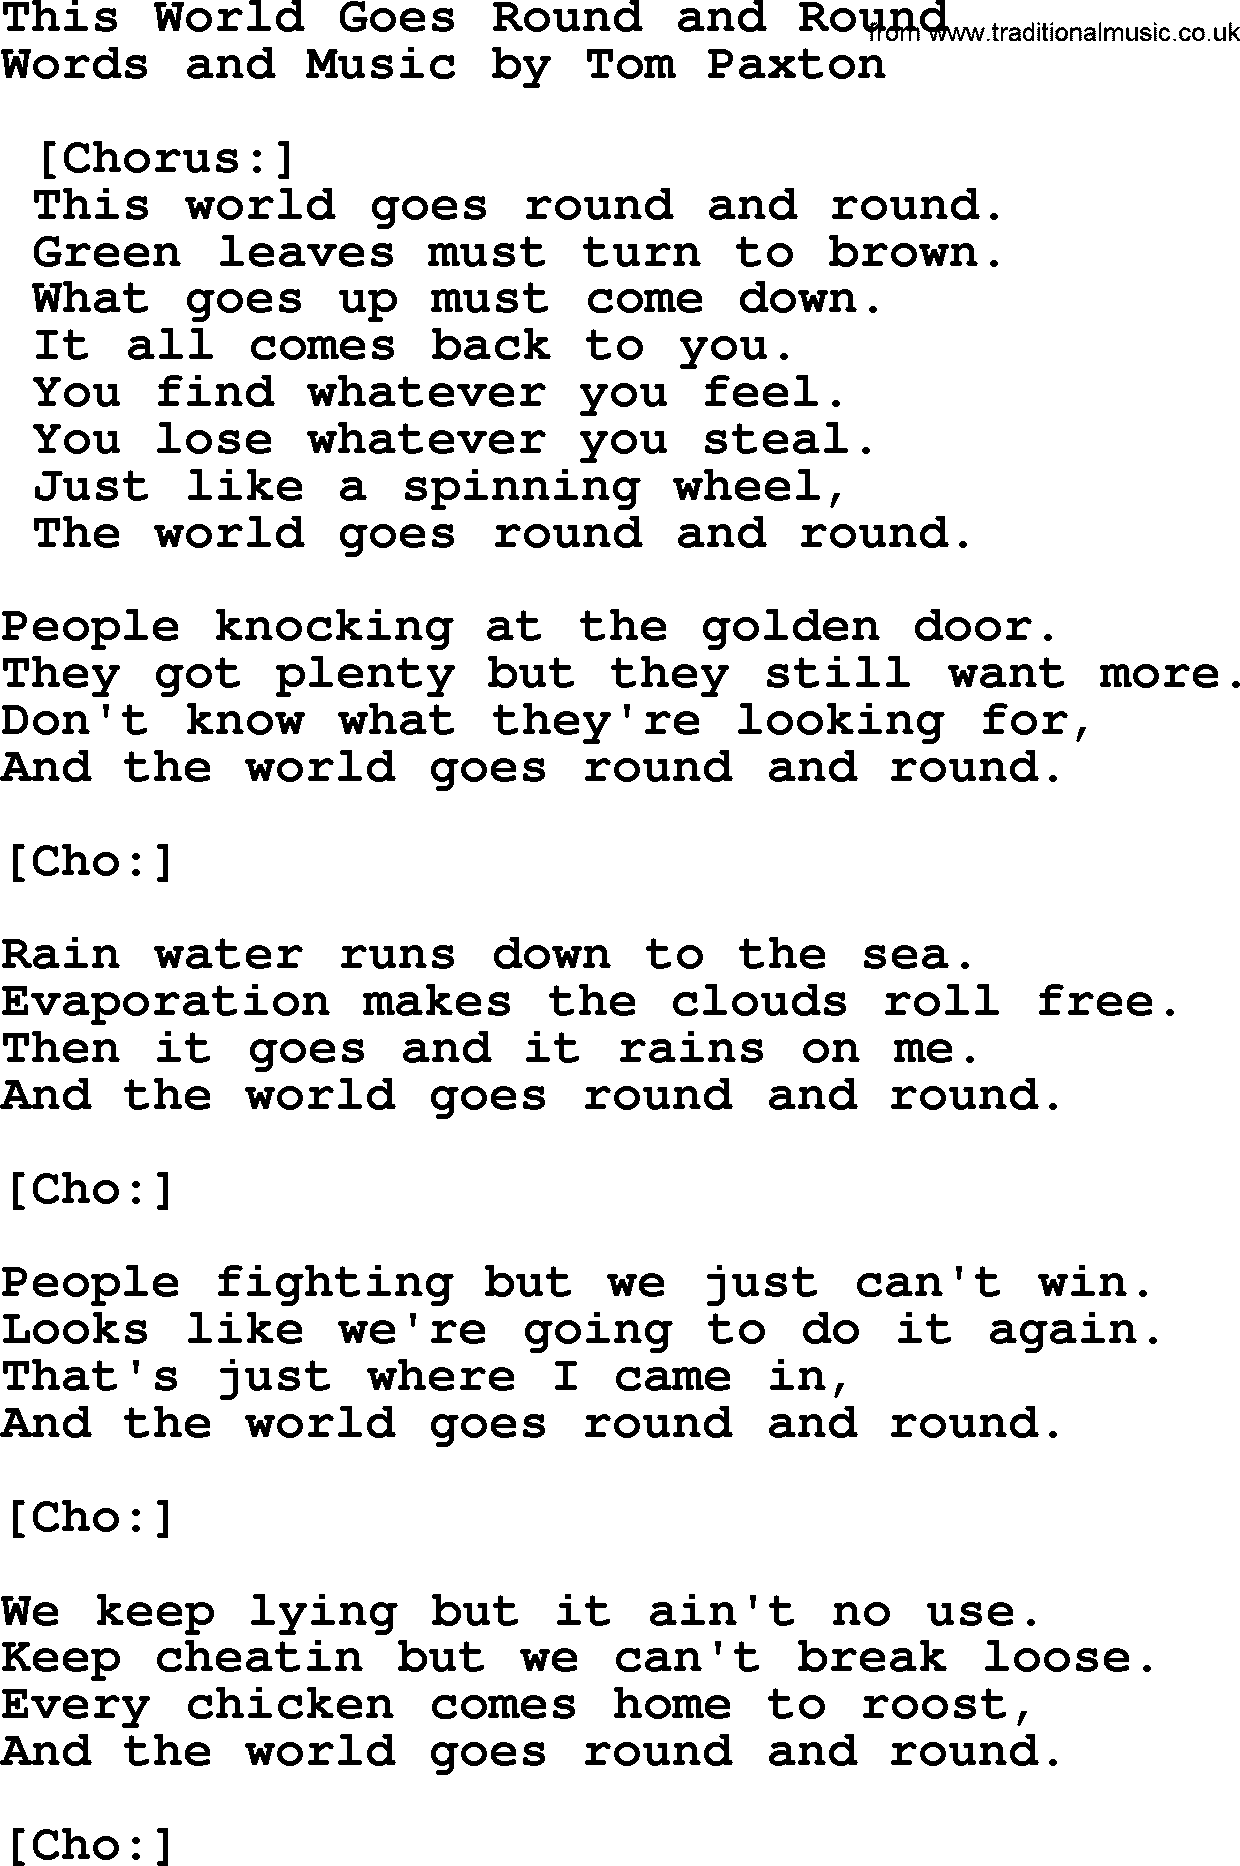 Tom Paxton song: This World Goes Round And Round, lyrics